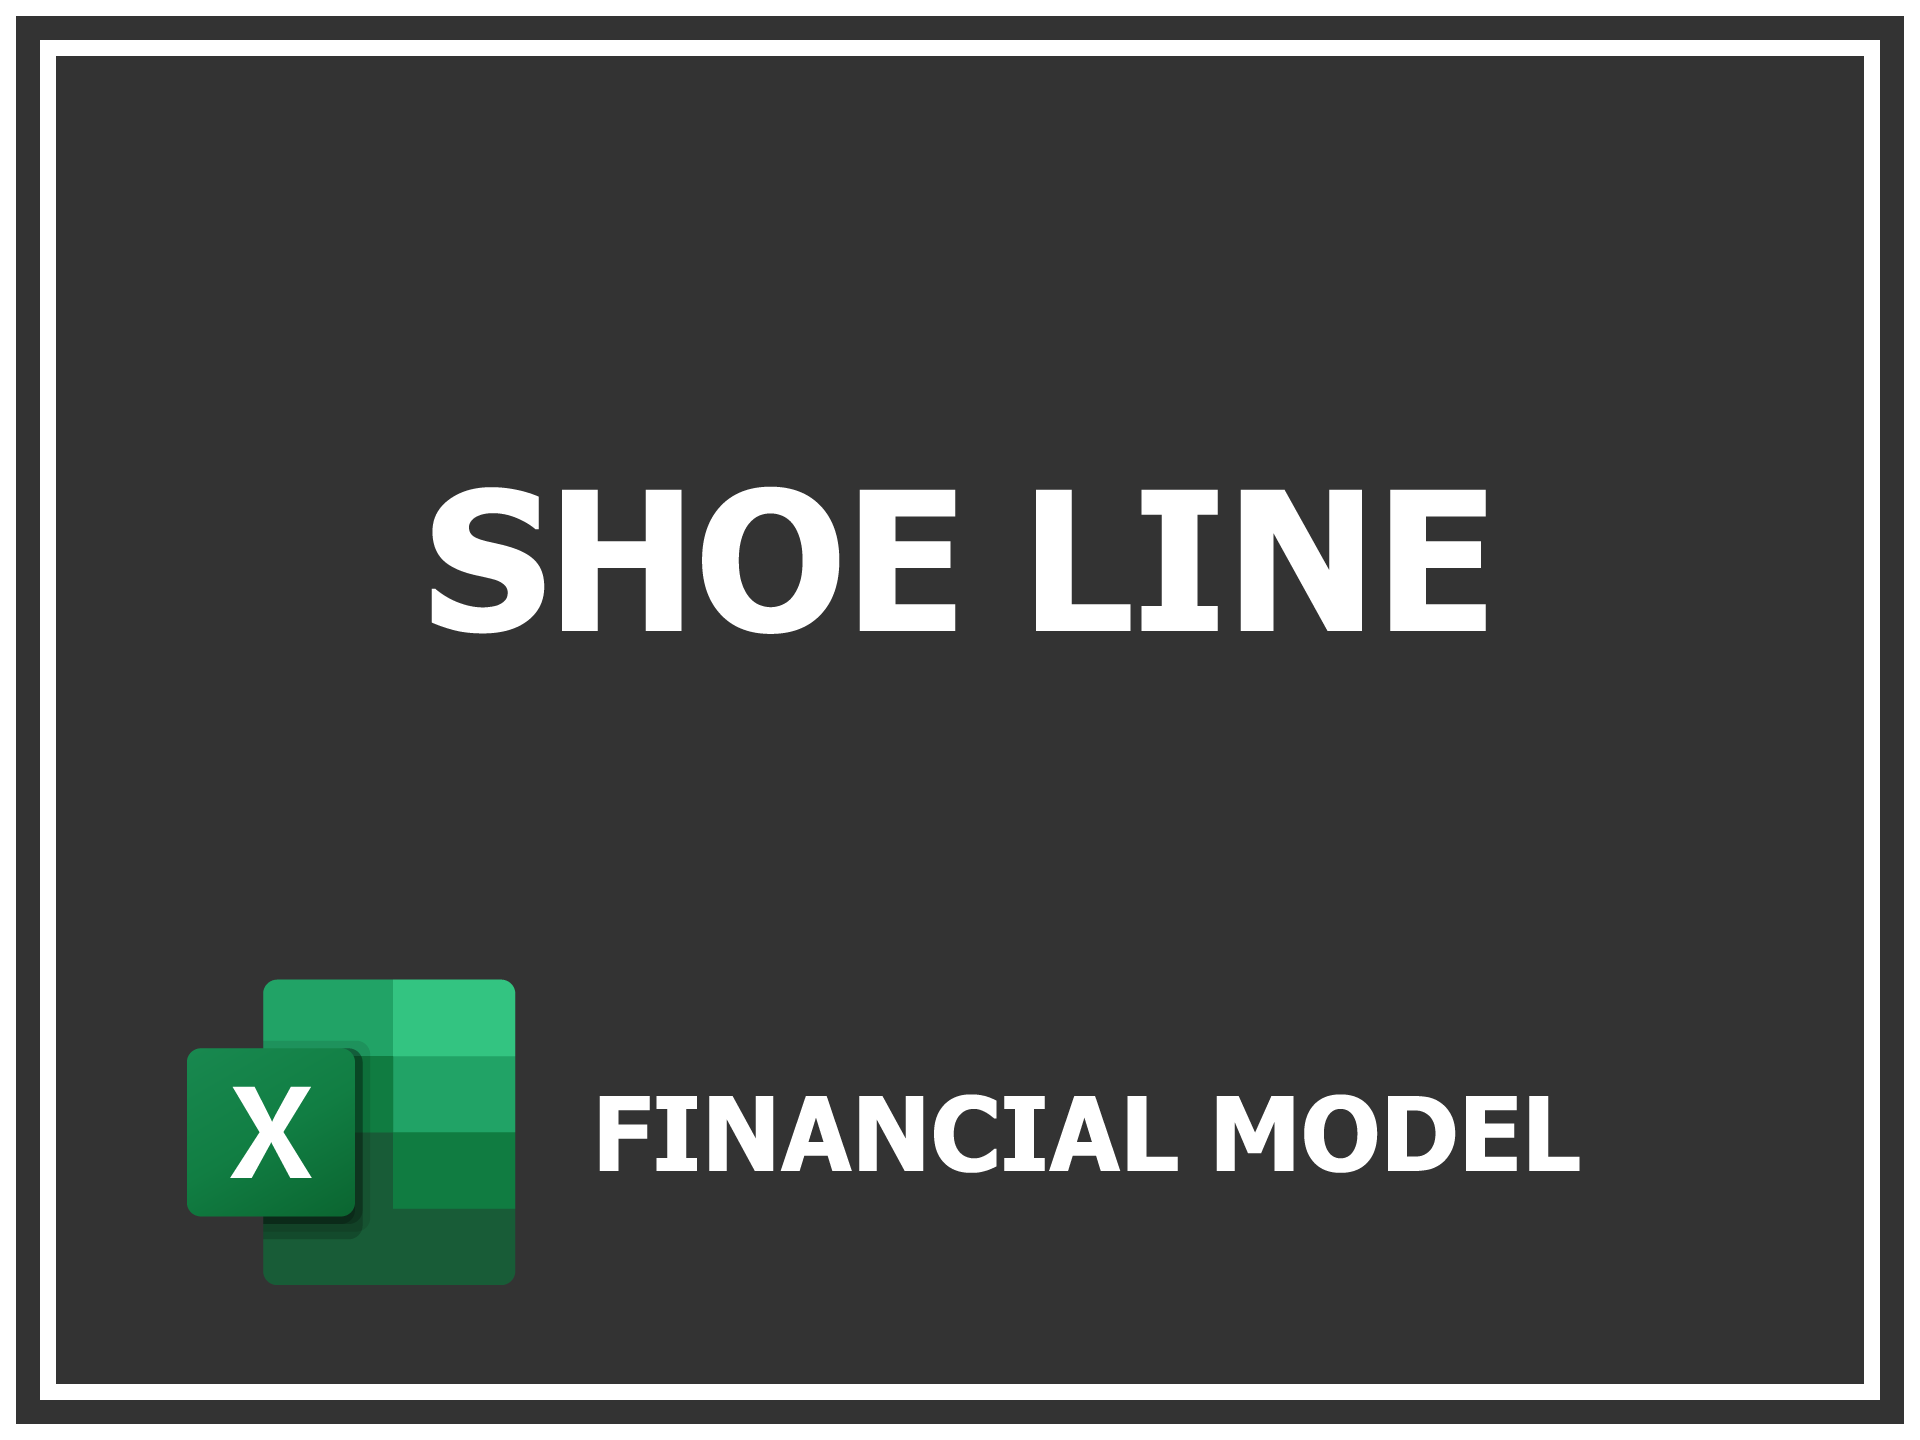 Shoe Line